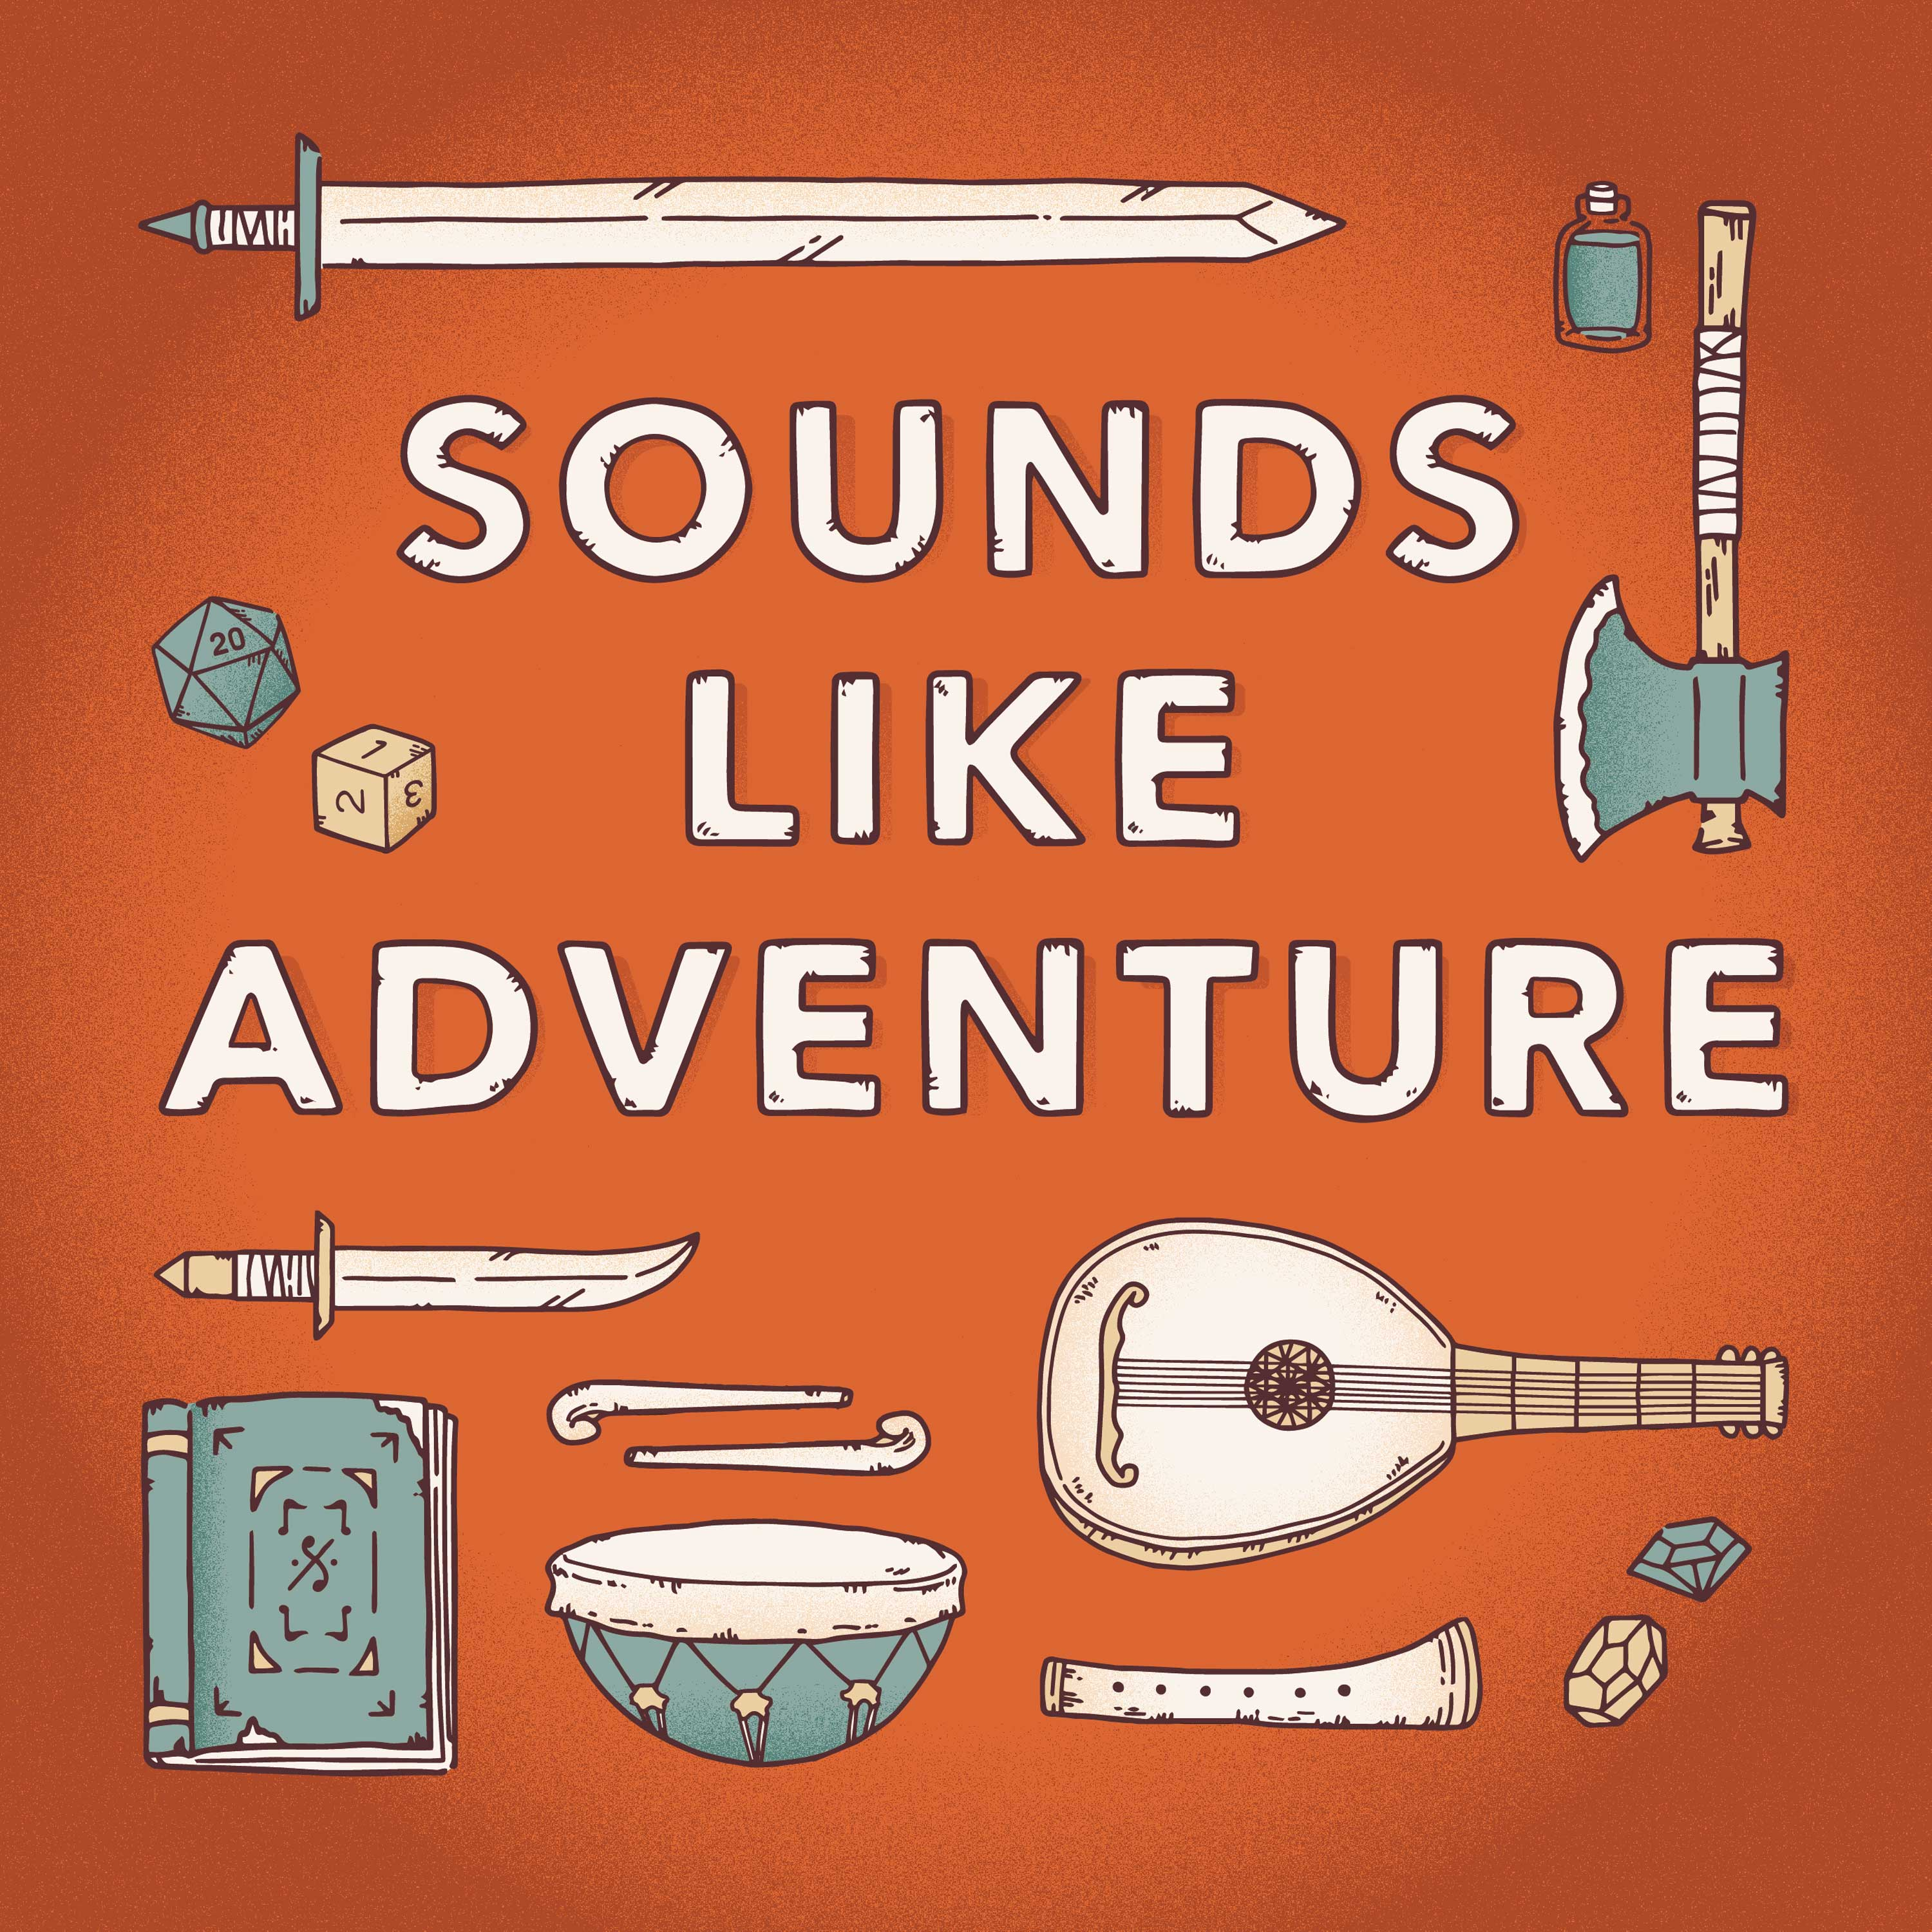 Bonus: What's next for Sounds Like Adventure?